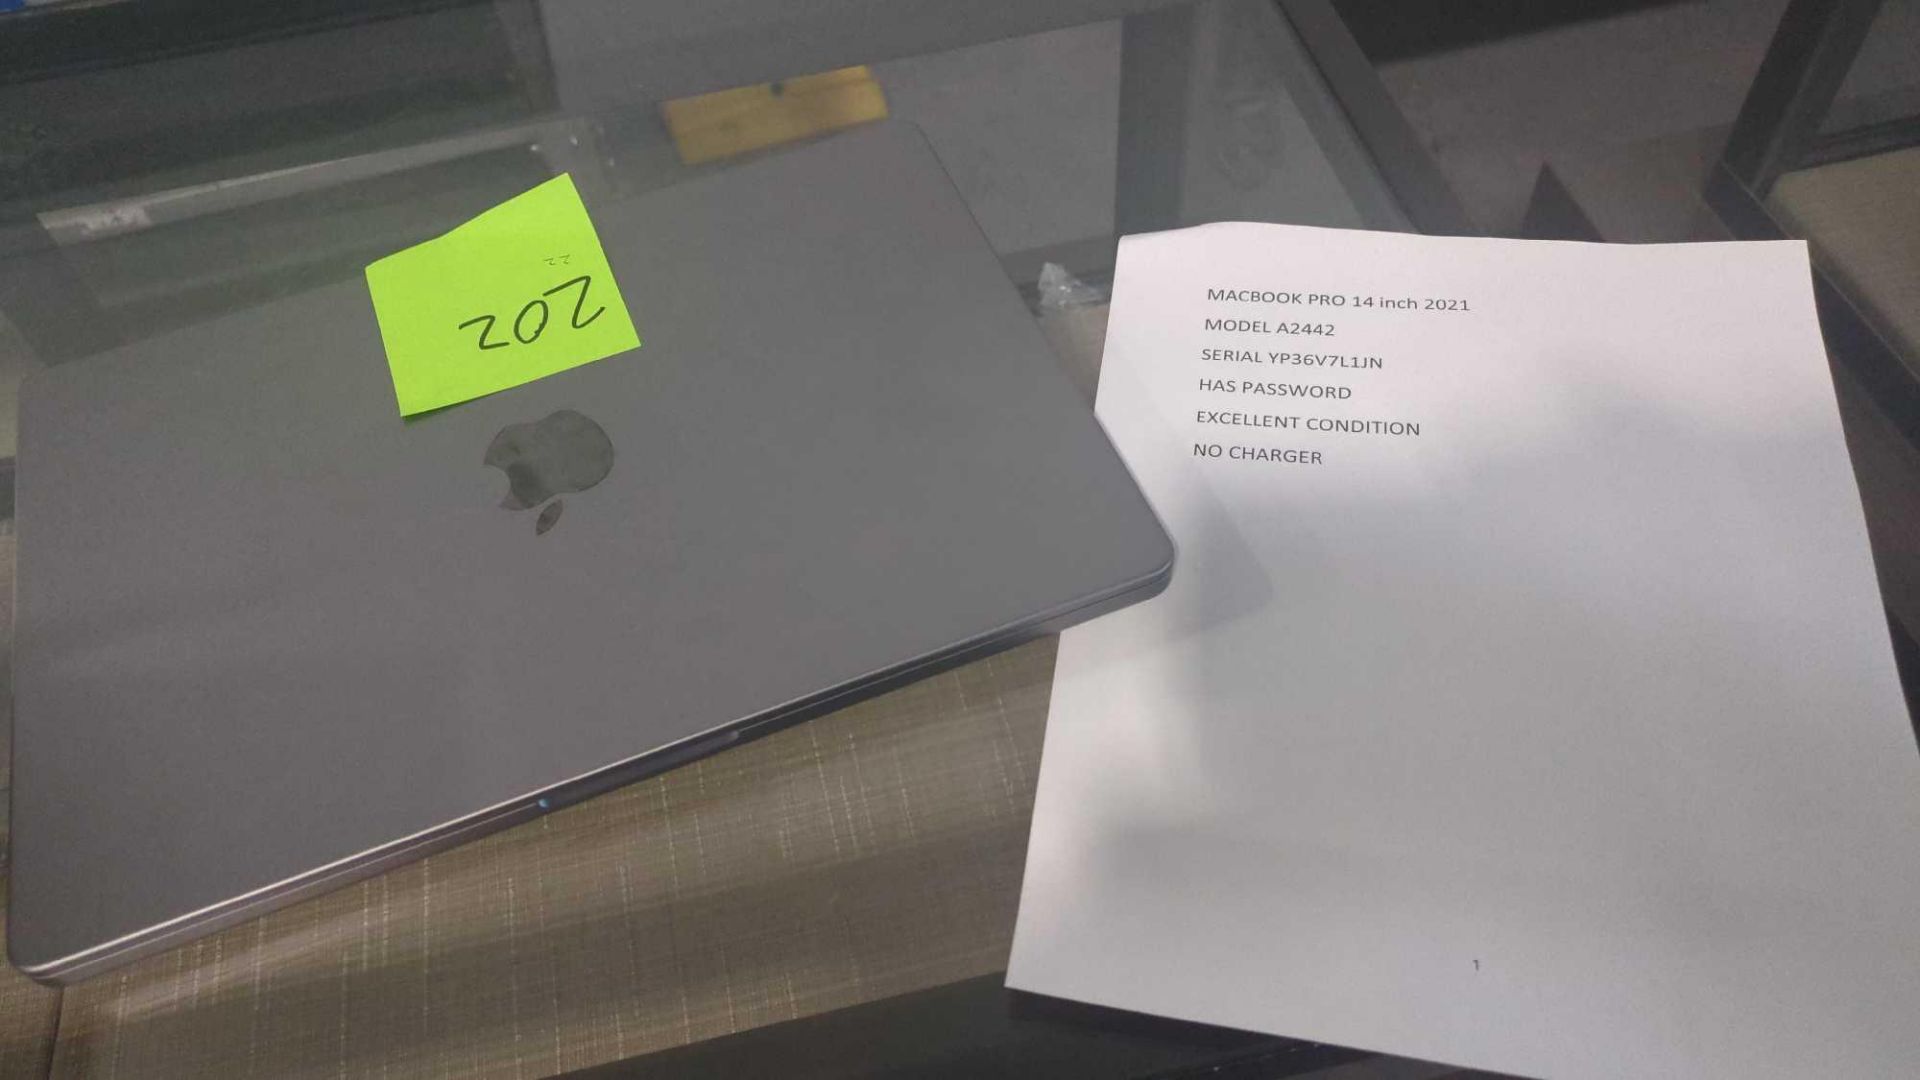 Apple MacBook Pro 14 inch? 2021 - Image 4 of 4